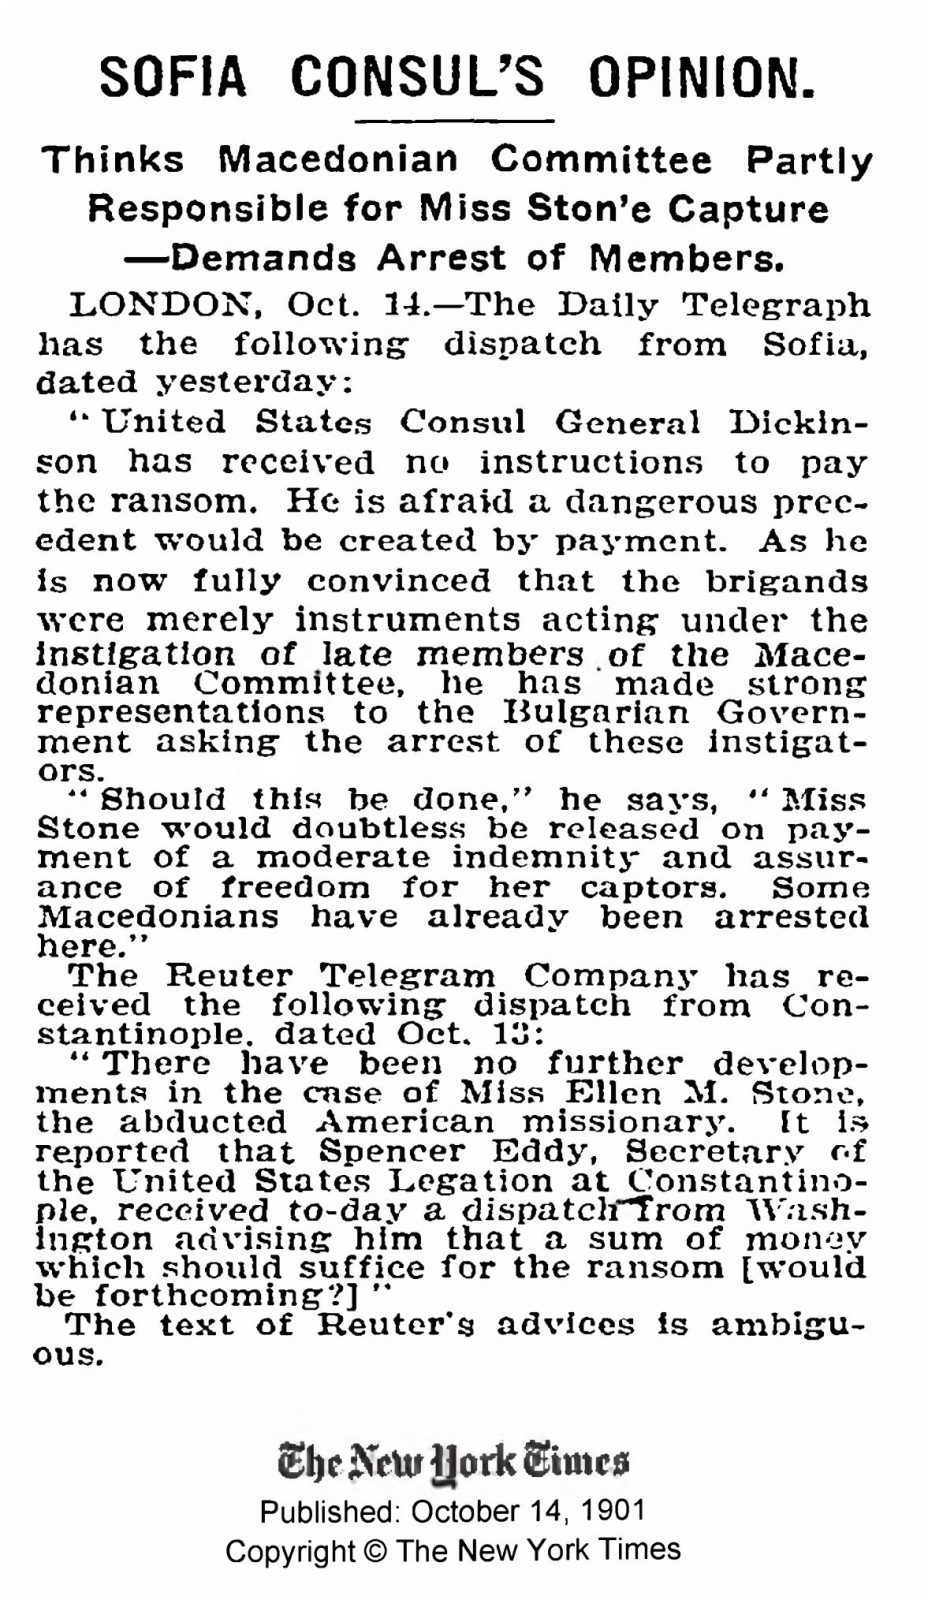 1901.10.14_The New York Times - Sofia consul's demands arrest of Macedonians